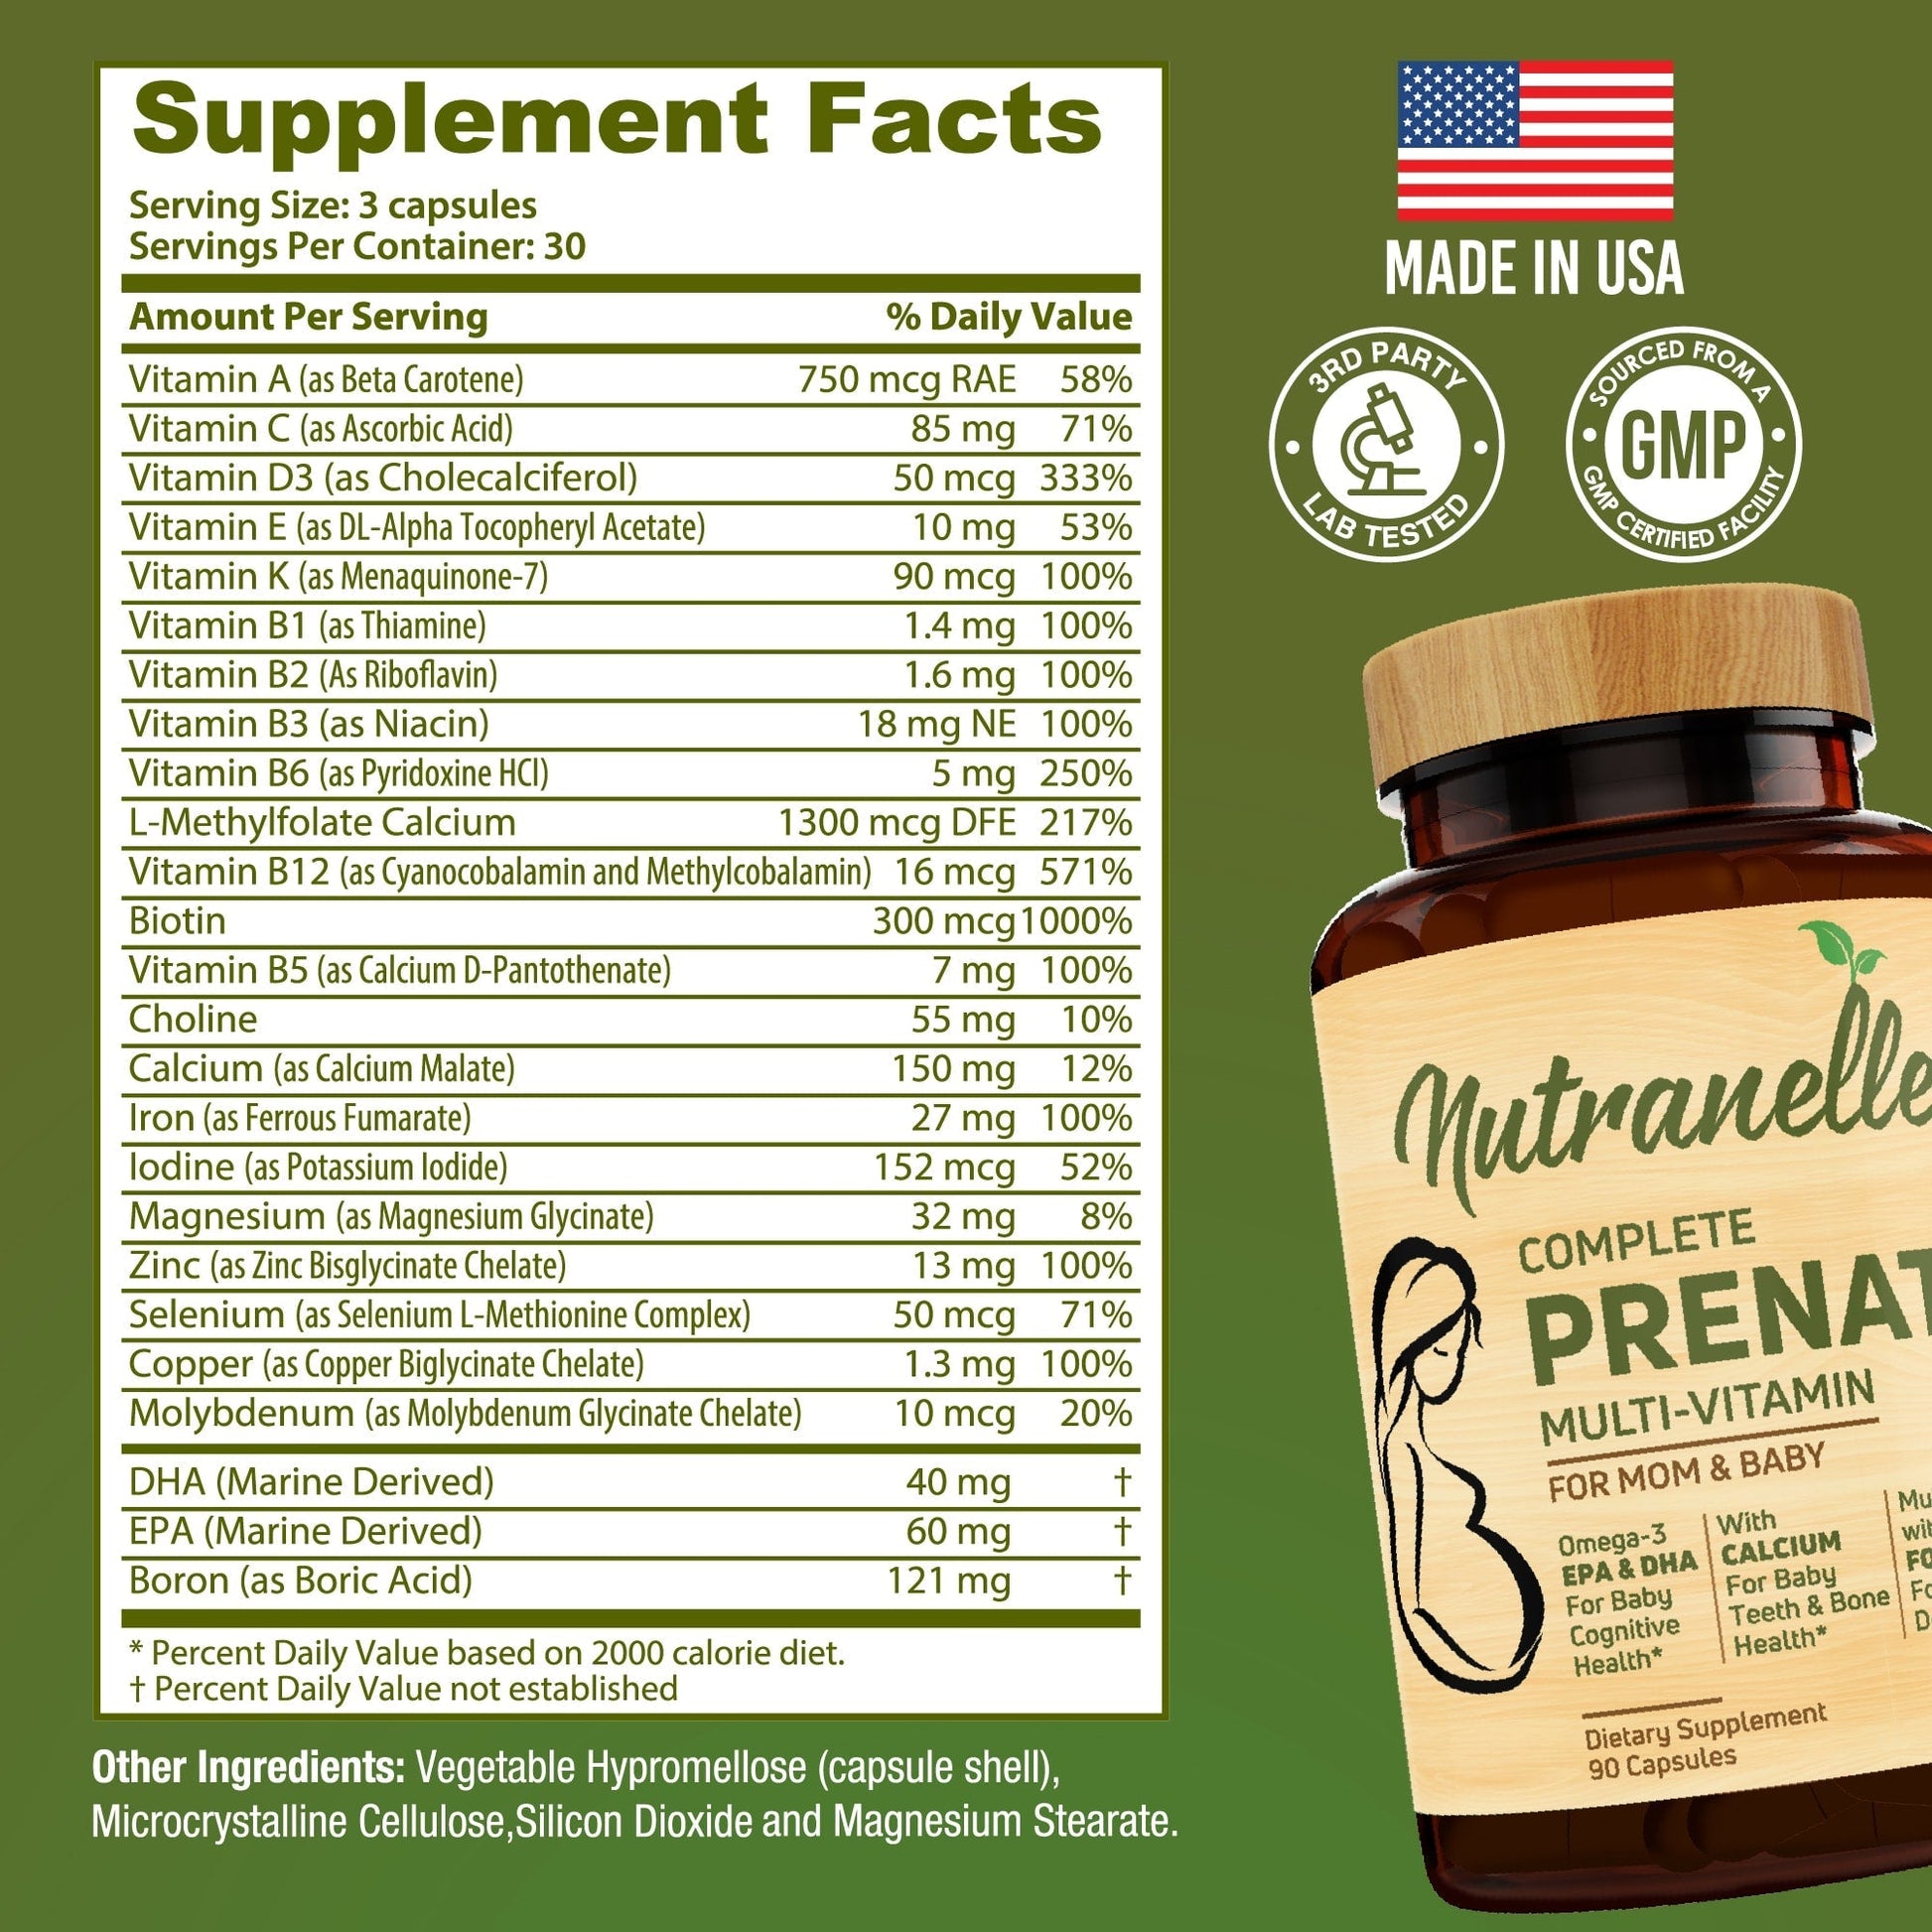 Natural Prenatal Vitamins - Nutranelle